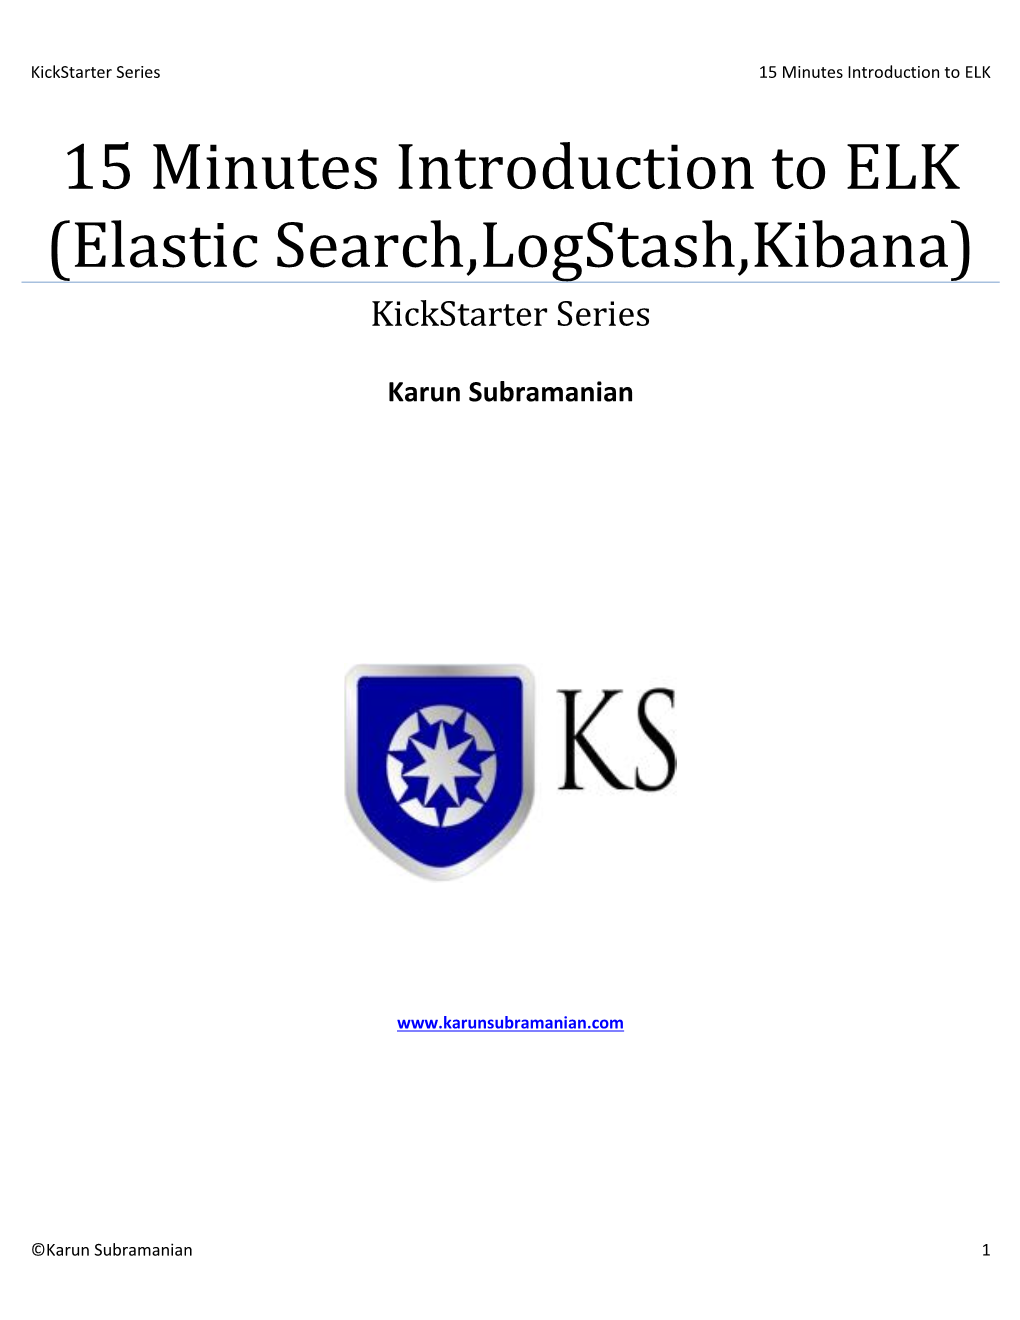 15 Minutes Introduction to ELK (Elastic Search,Logstash,Kibana) Kickstarter Series